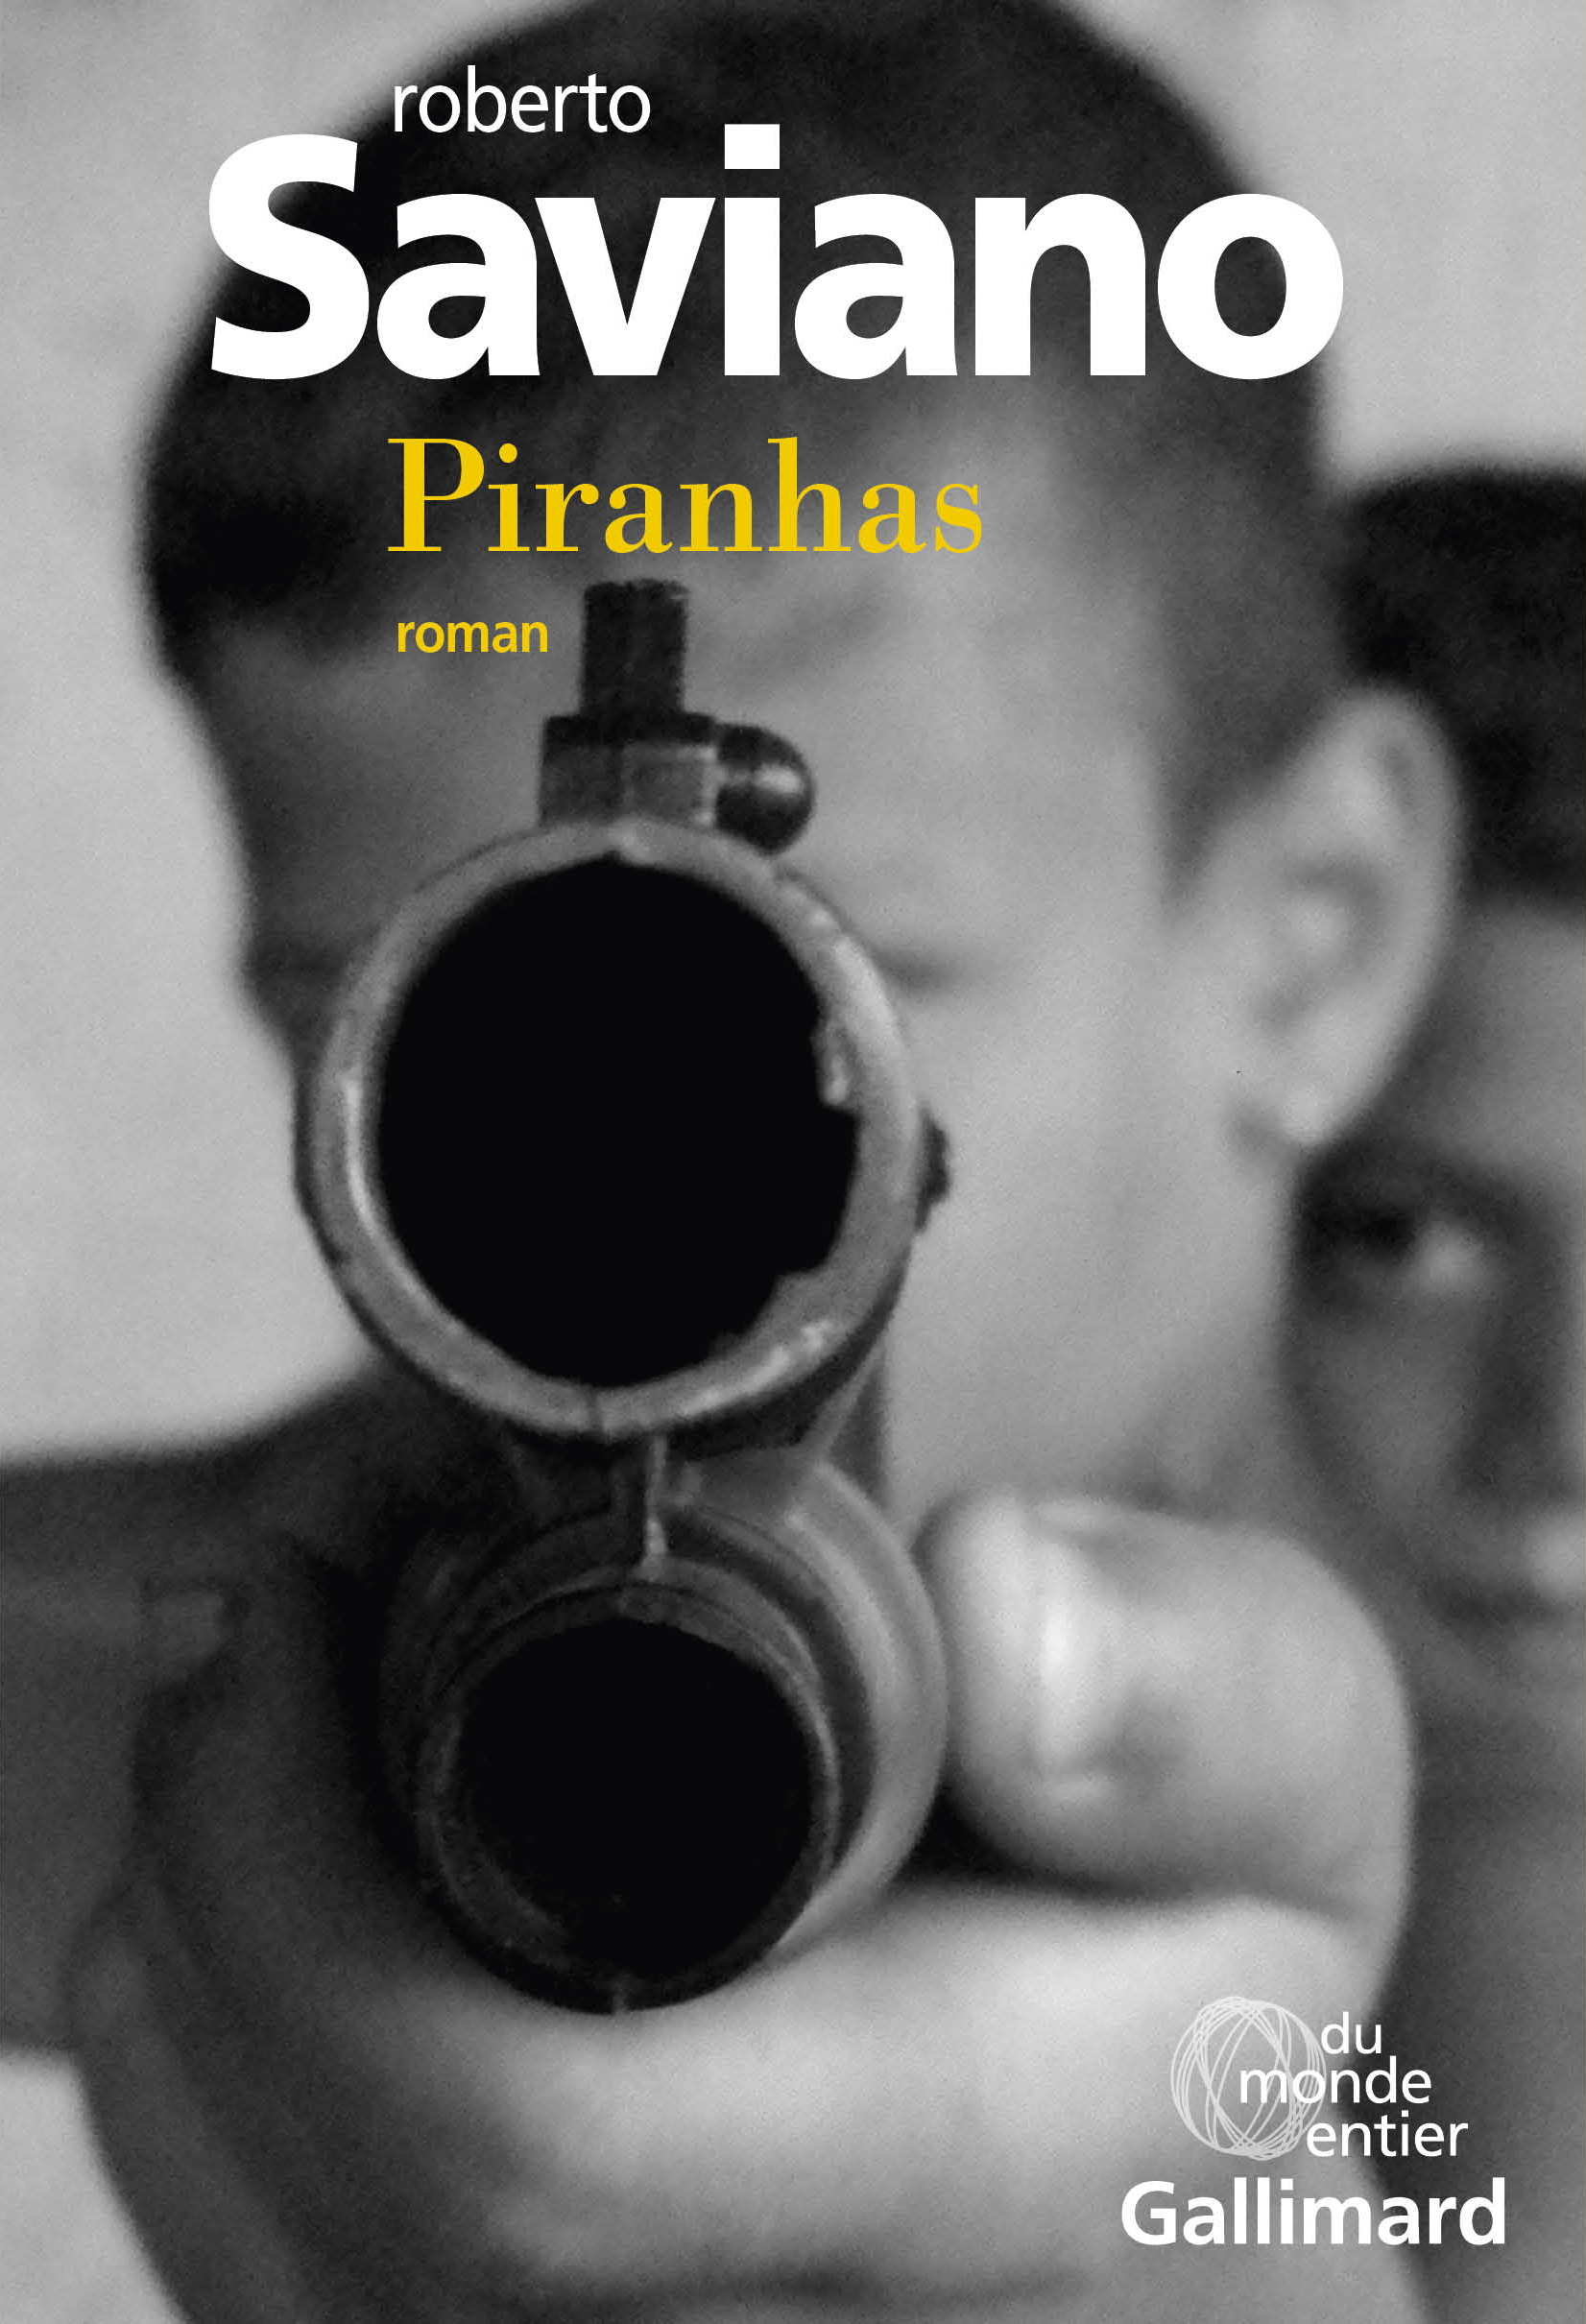 Couverture du roman "Piranhas" de Roberto Saviano.